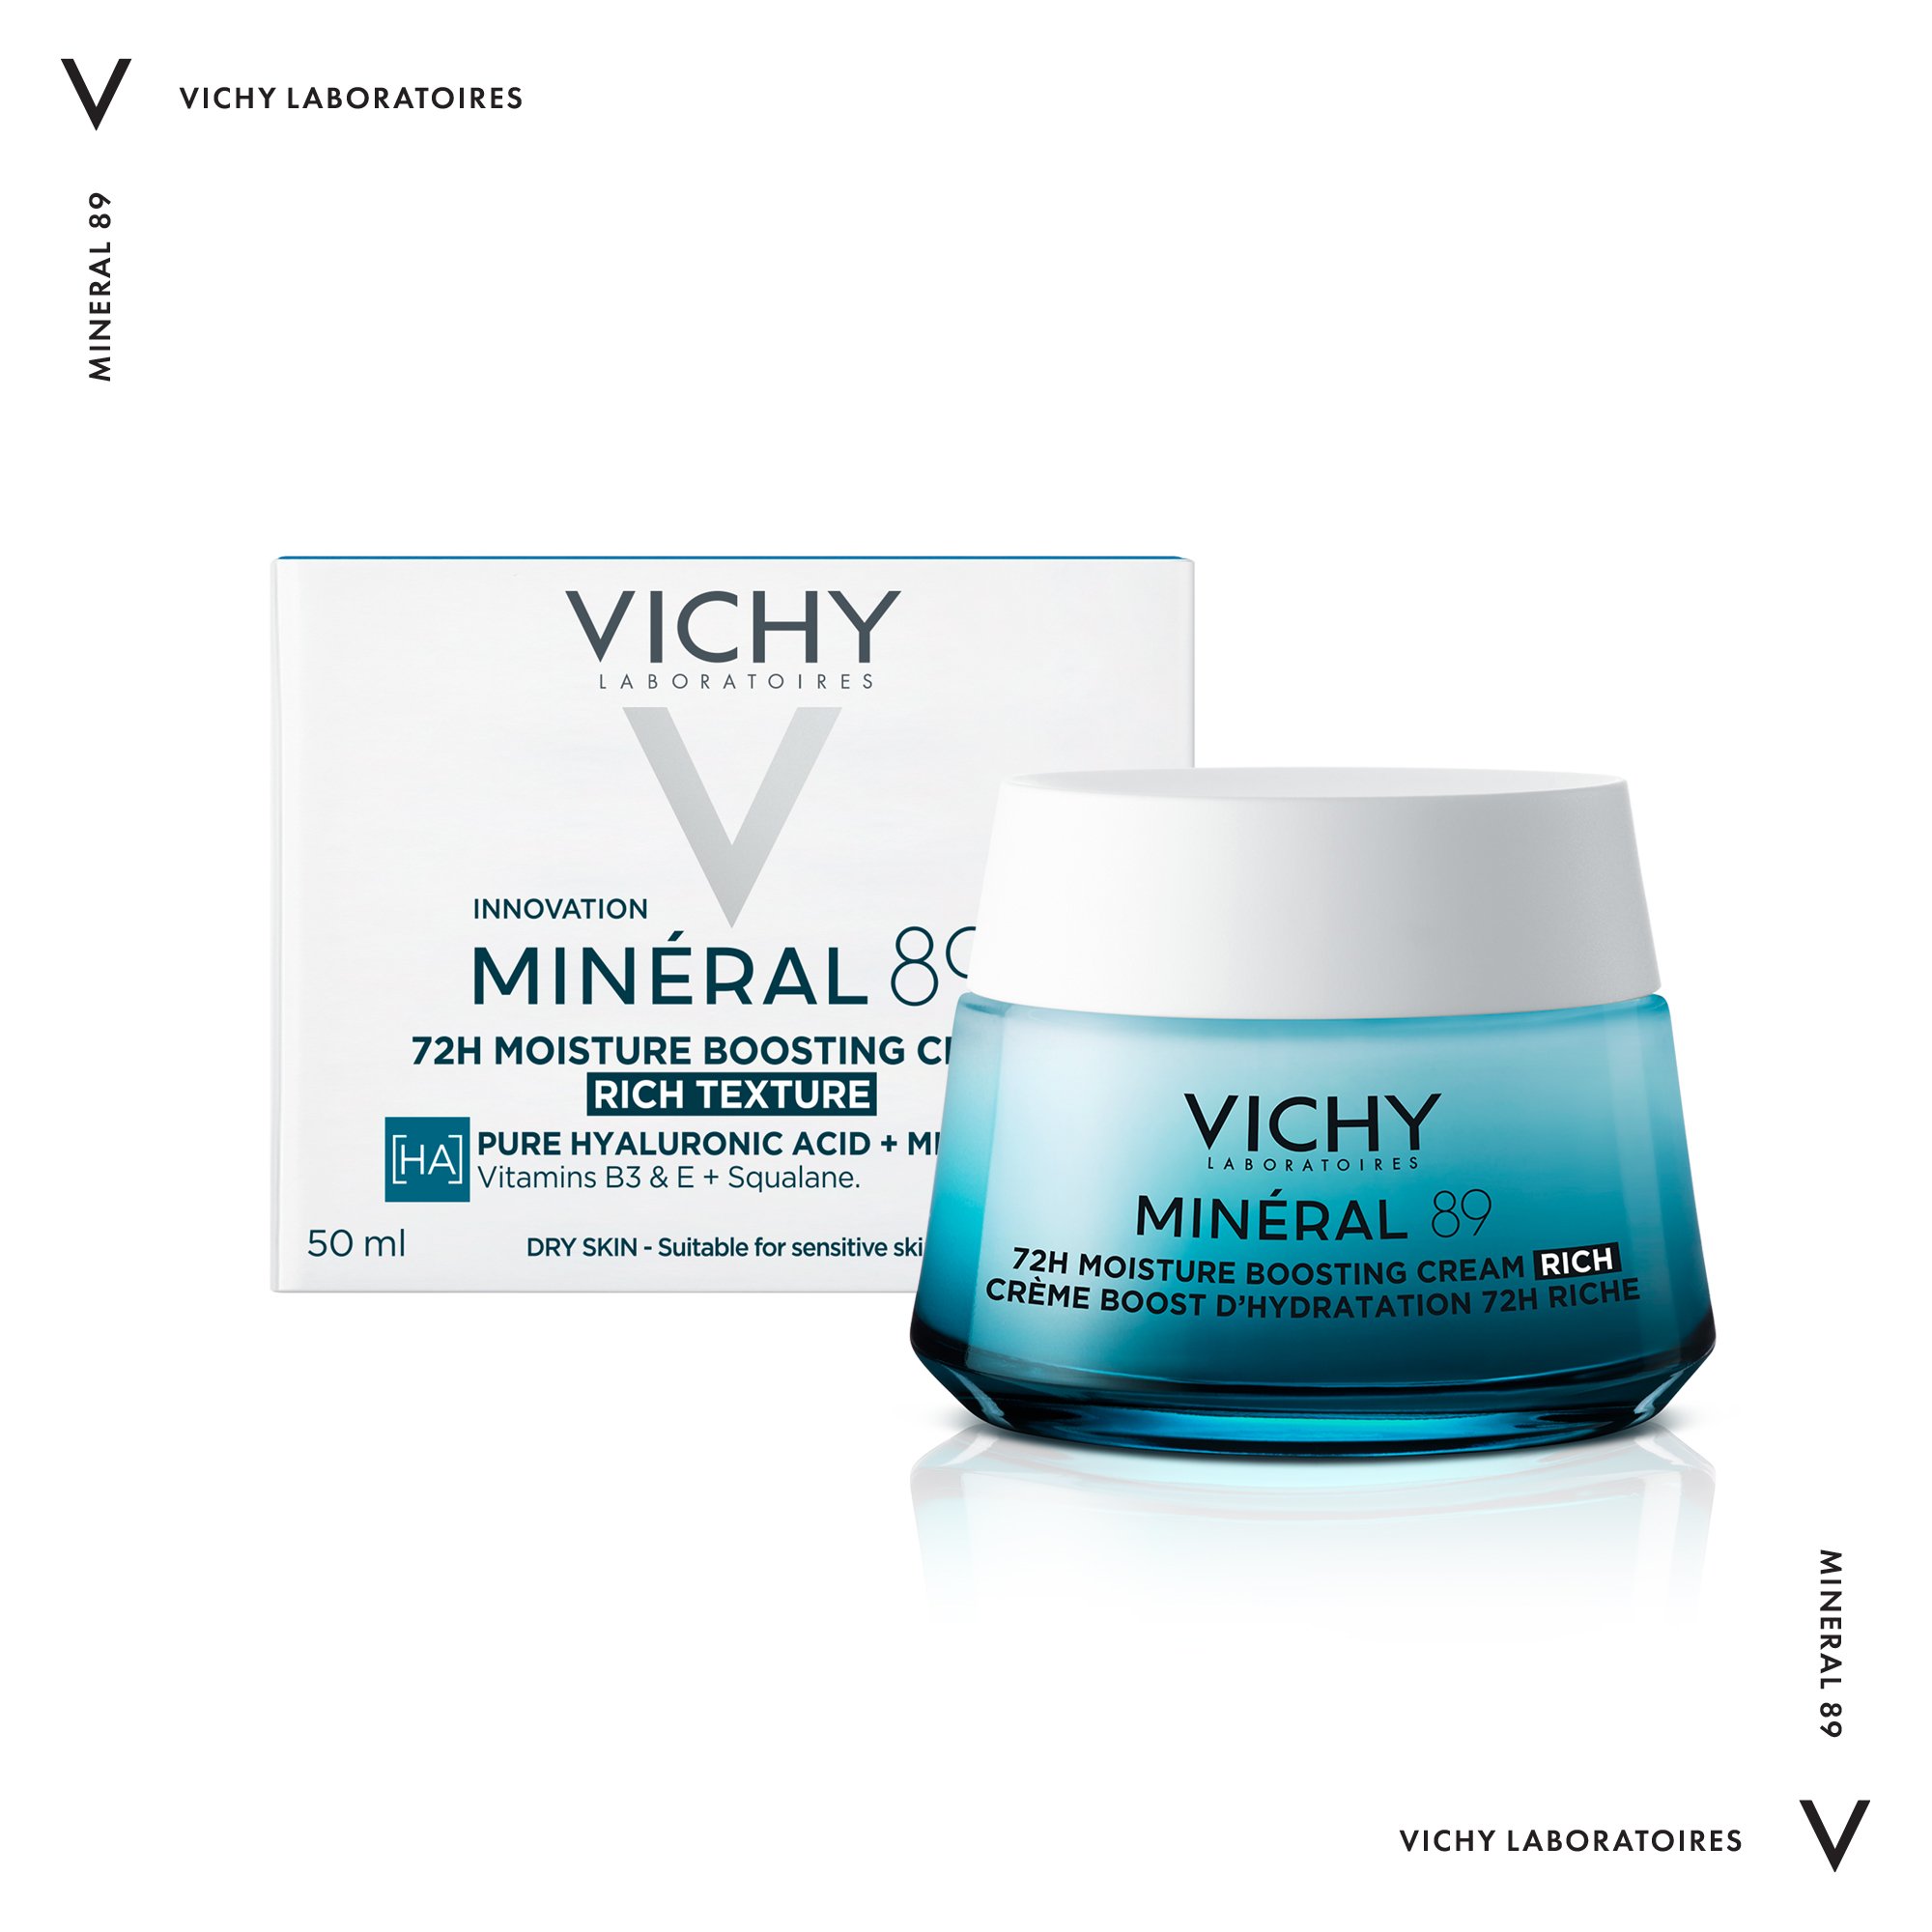 Насичений крем для сухої шкіри Vichy Mineral 89 Rich 72H Moisture Boosting Cream, 50 мл - фото 2